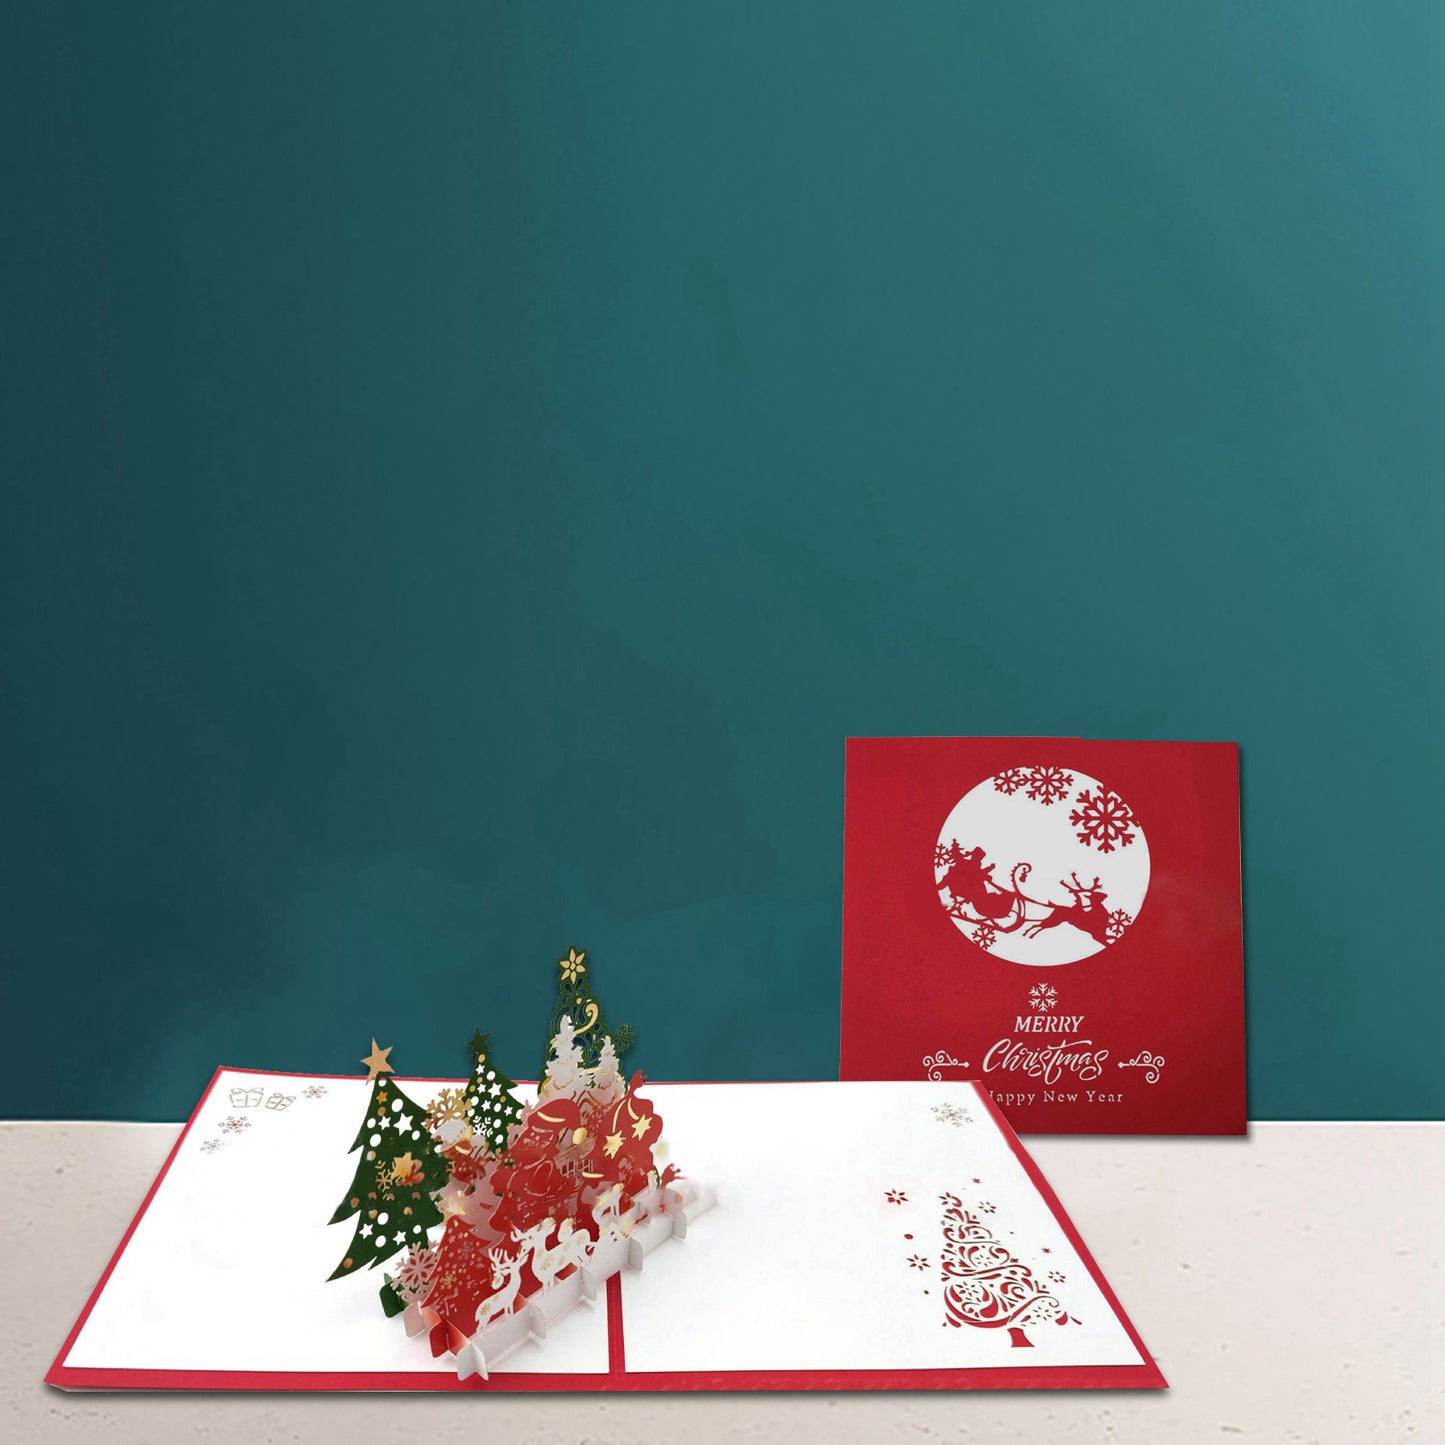 3D pop-up Christmas card, Christmas forest card